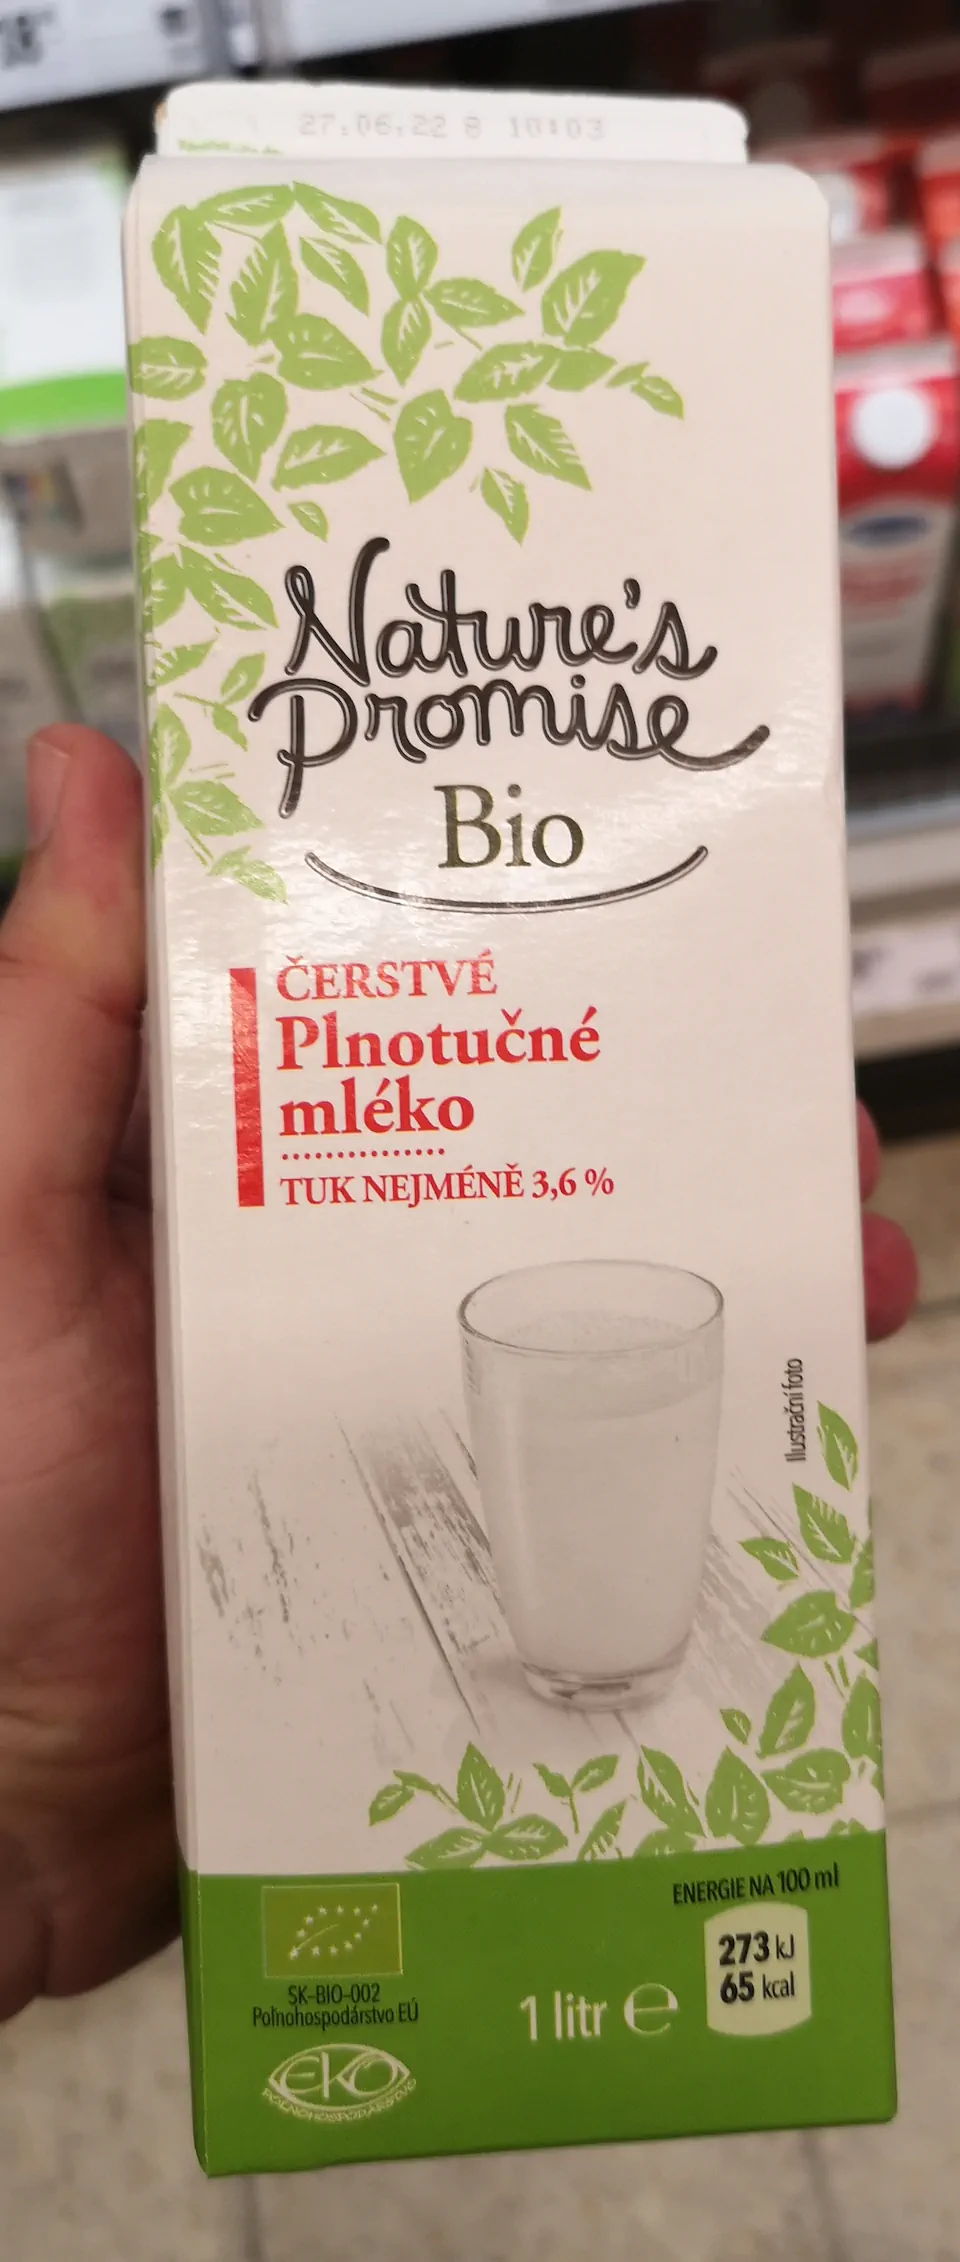 Natureś promise Bio plnotučné mléko